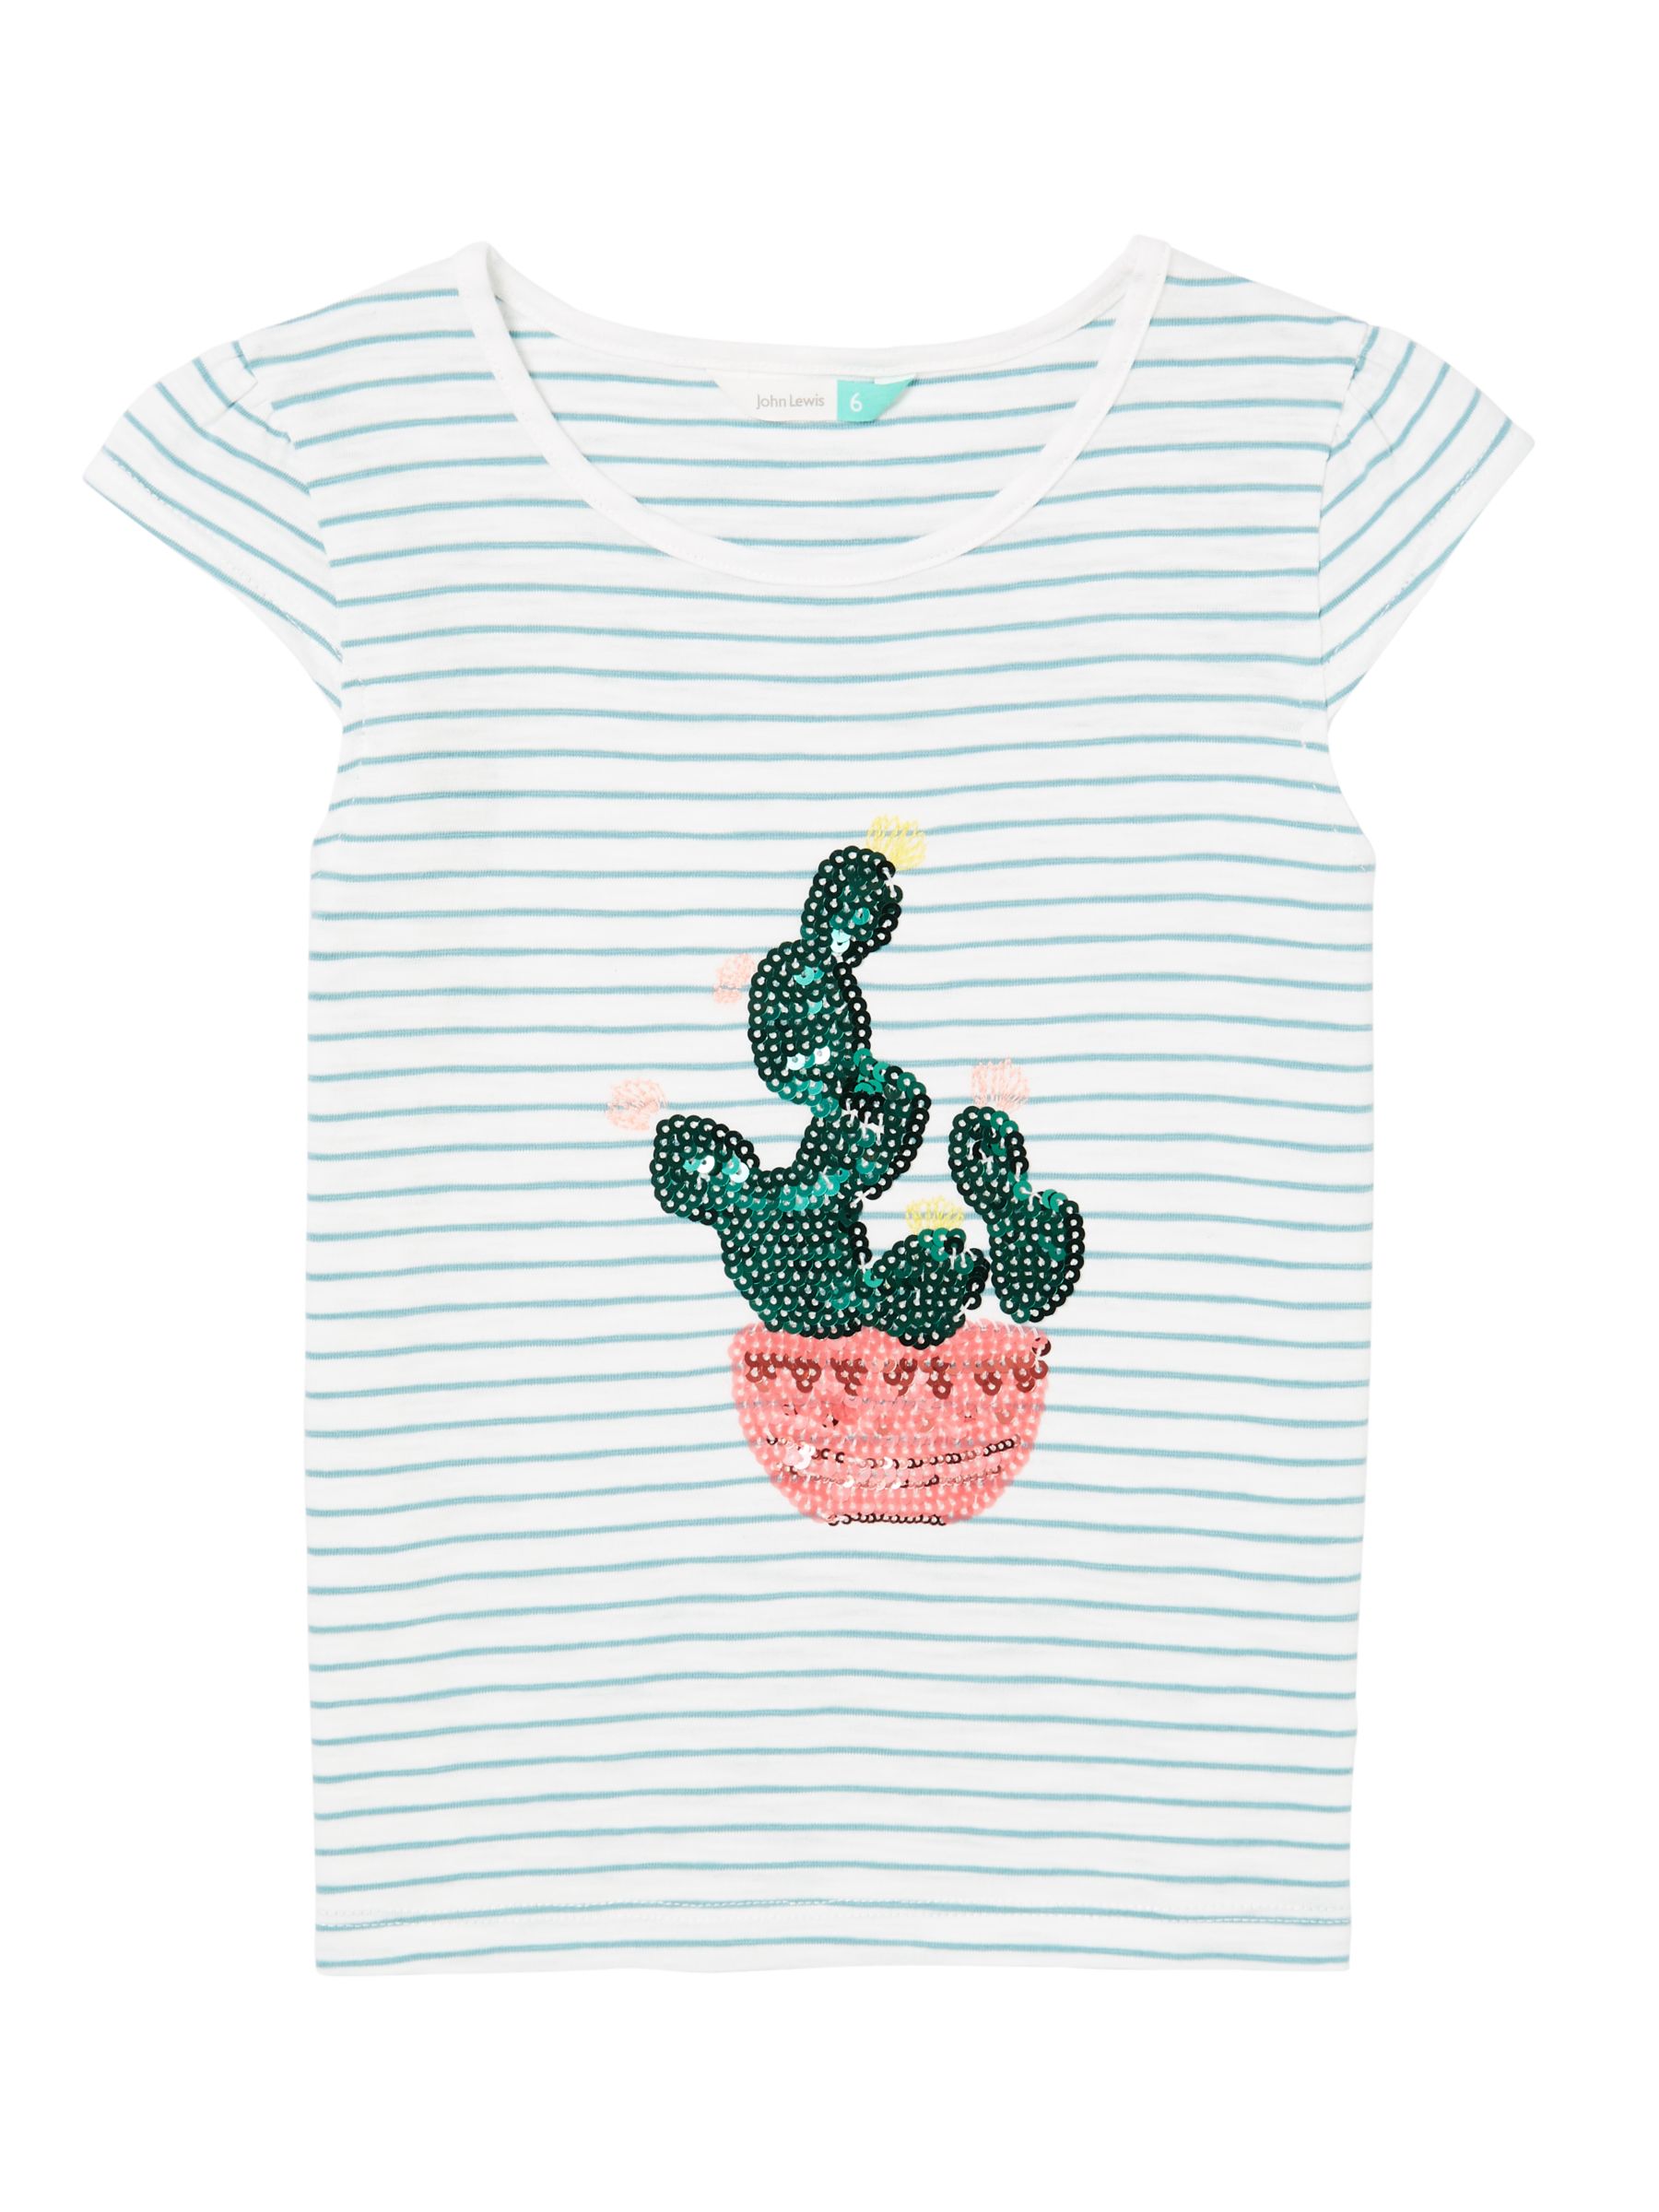 John Lewis & Partners Girls' Sequin Cactus T-Shirt, Cream